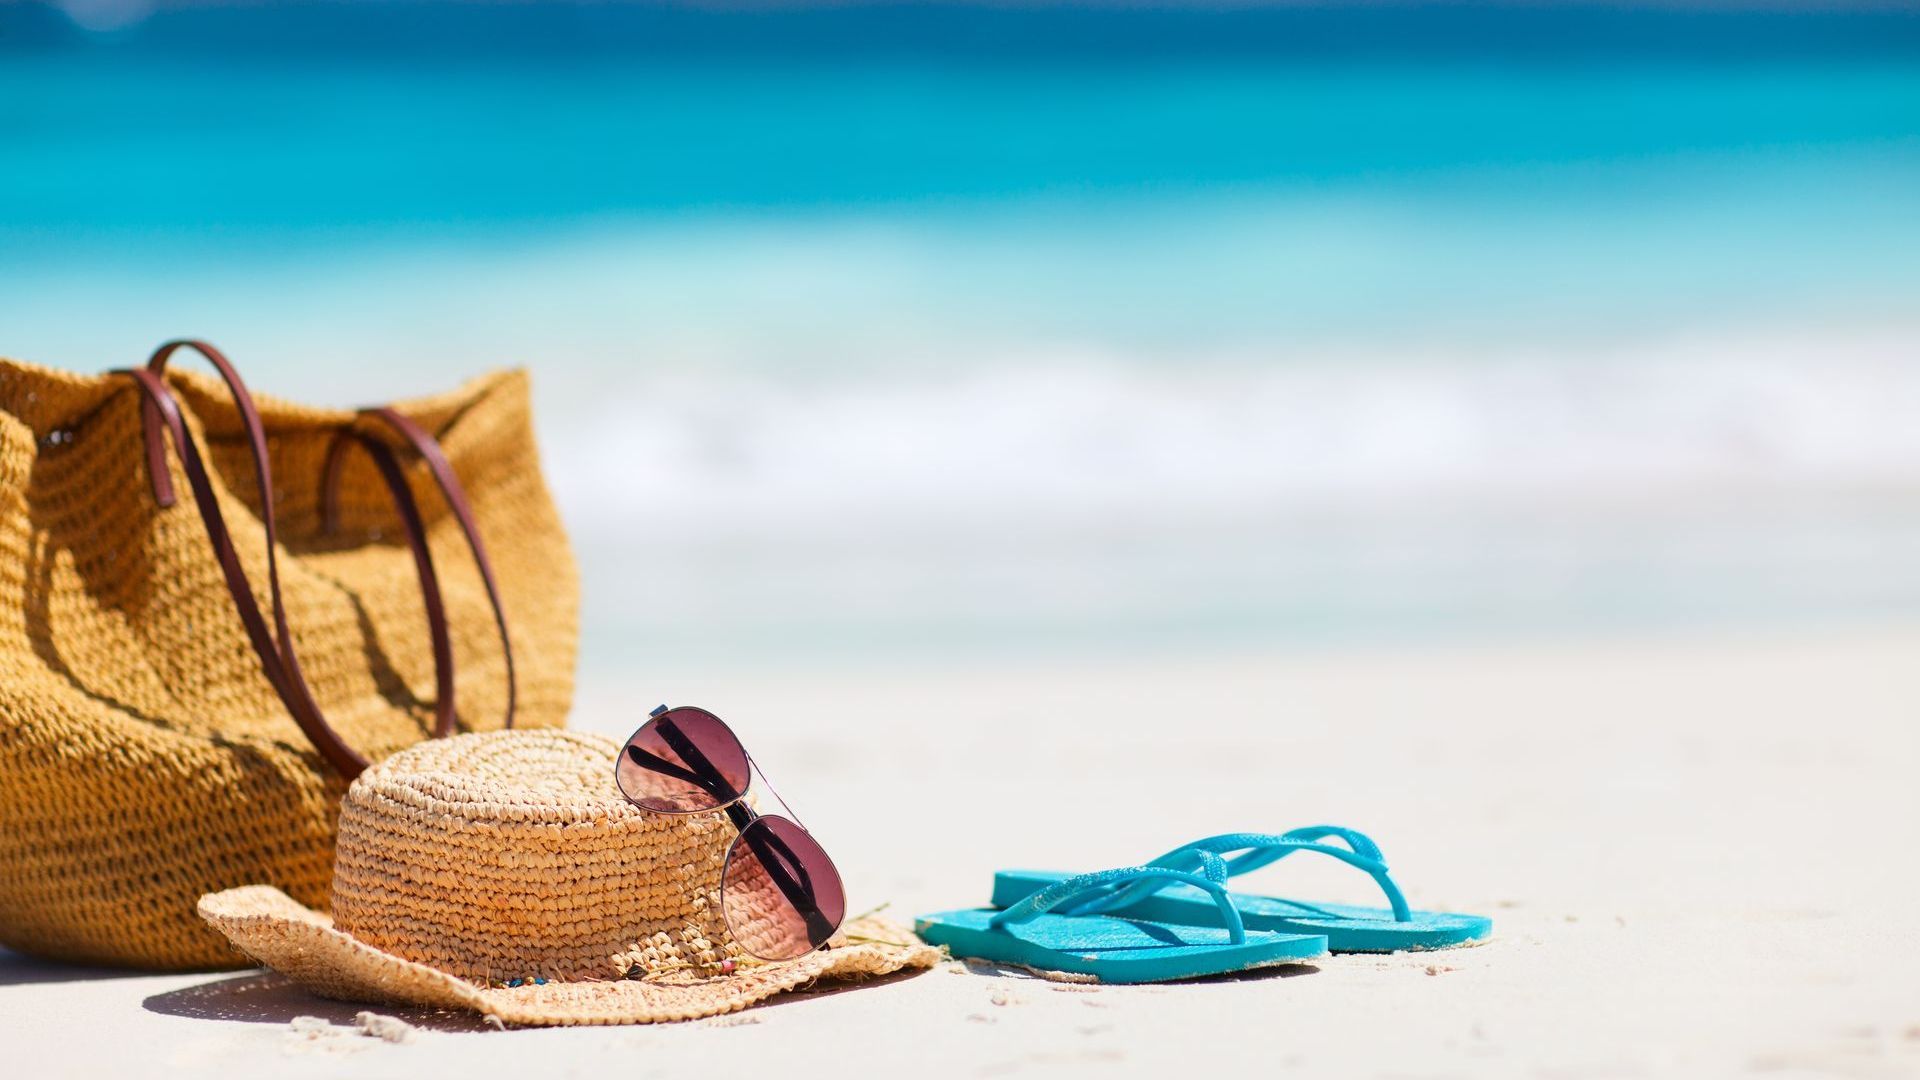 bag, beach hat and slipper on the  beach sand